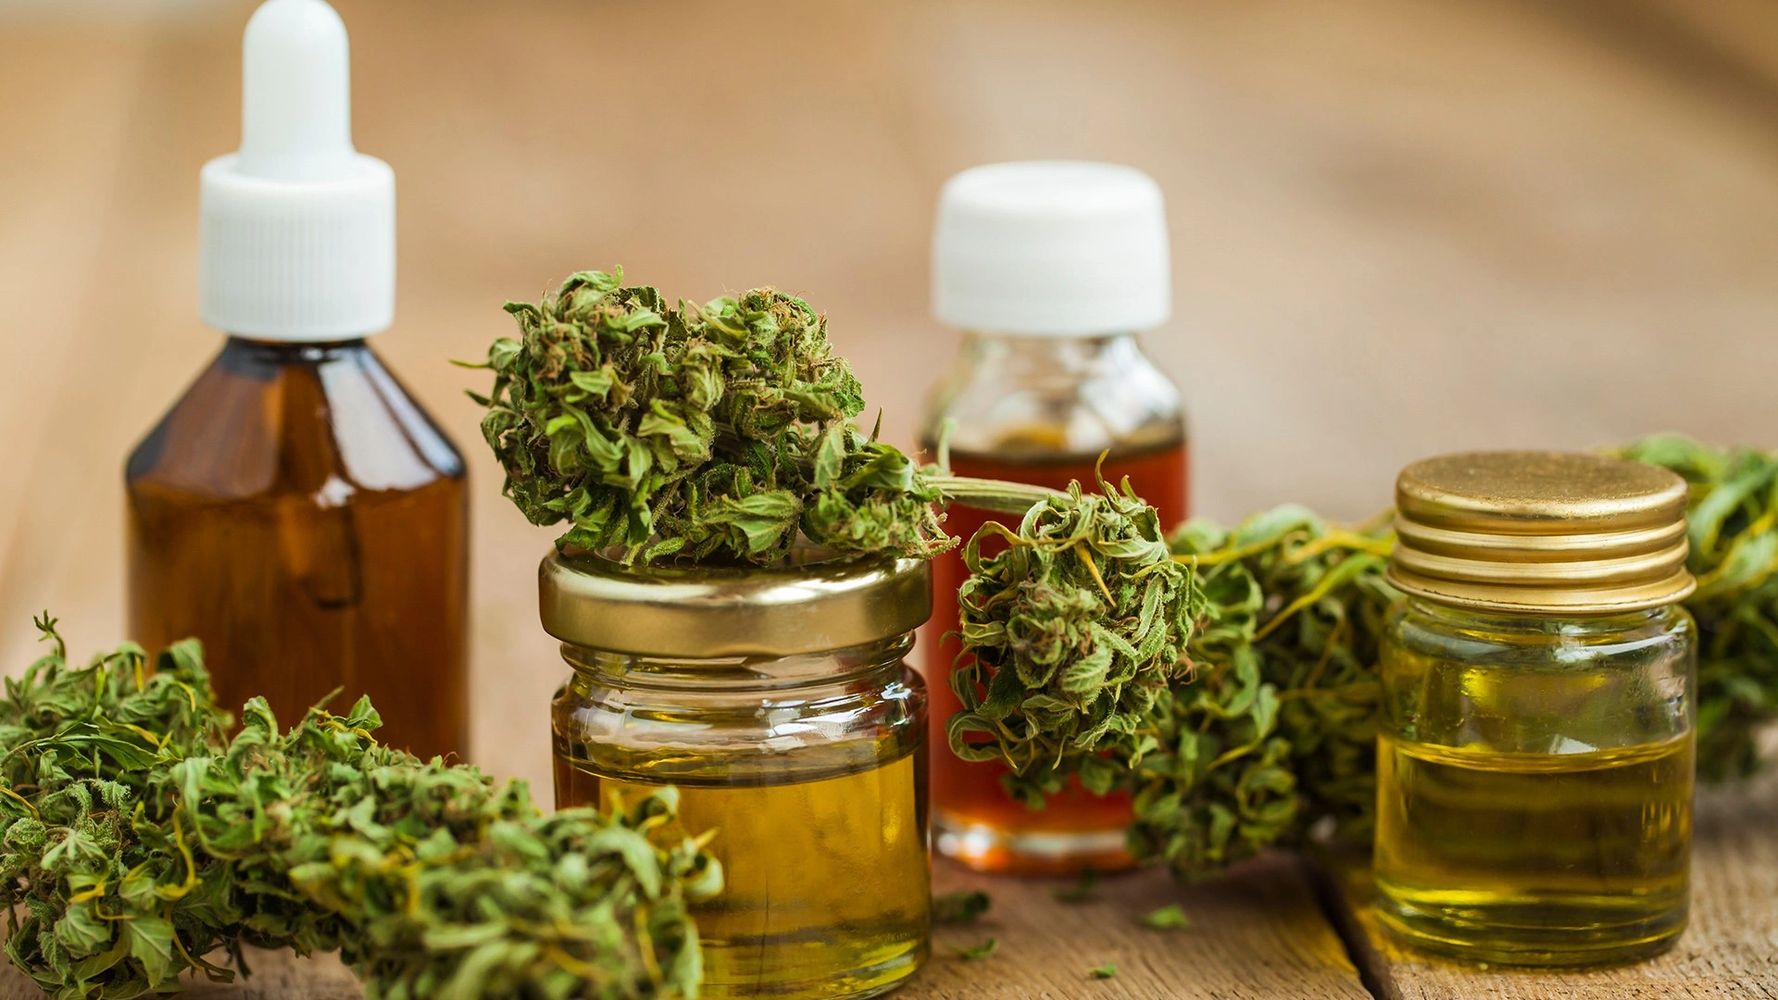 Hemp CBD tincture salve CBG cannabis oil THC medicine natural remedy flower terpenes cannabinoids